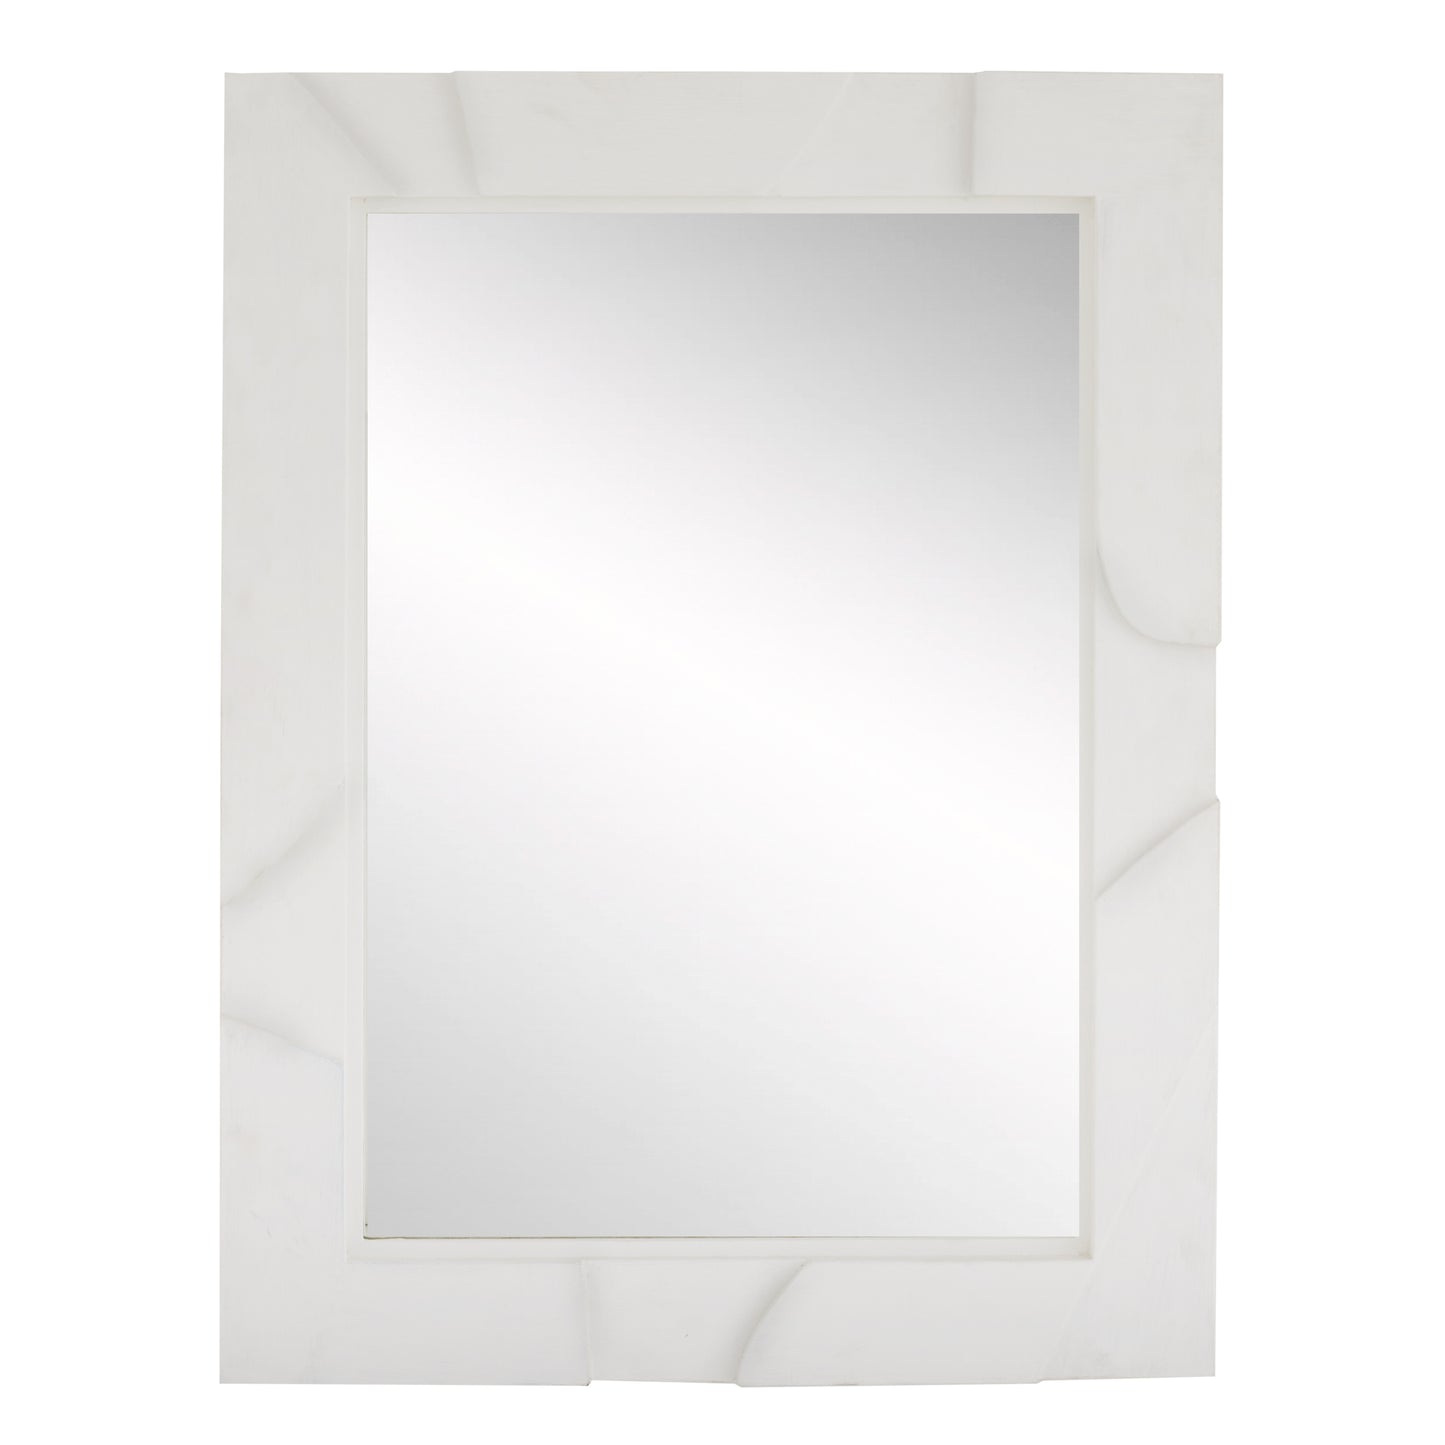 Expressive Safra Wall Mirror - White Gesso Finish, Cubist Sculpture Inspired Design